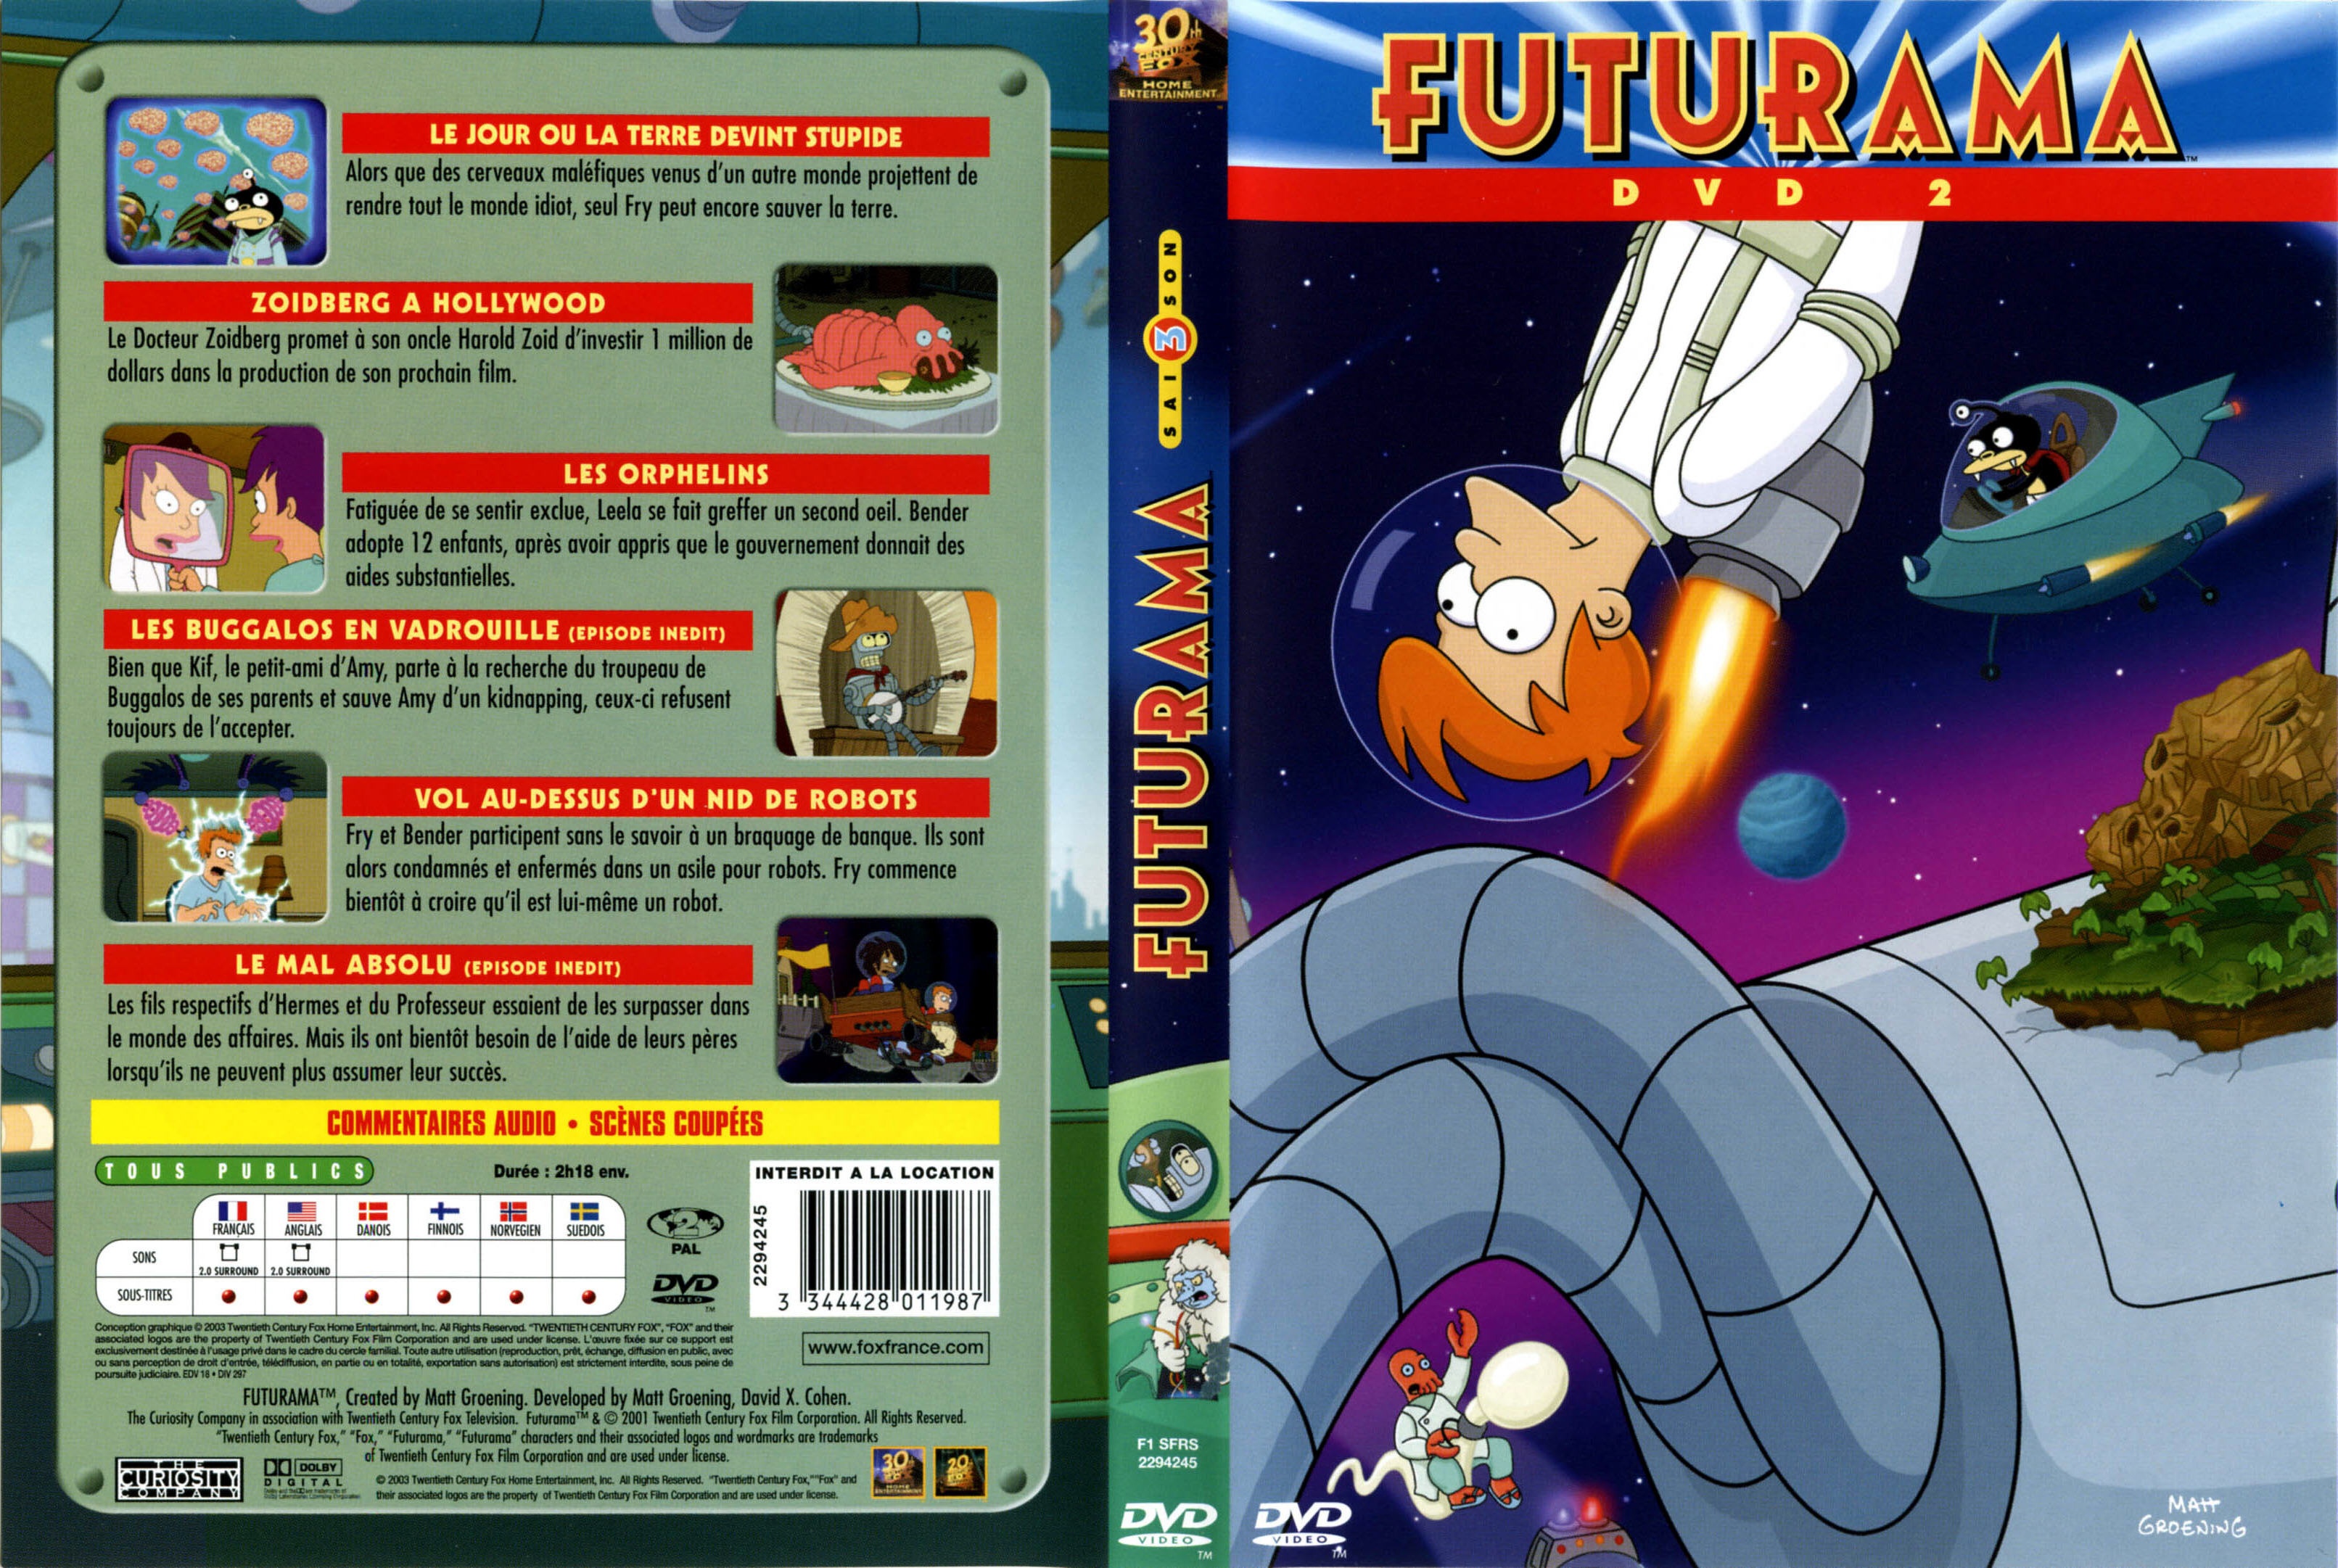 Jaquette DVD Futurama saison 3 DVD 2